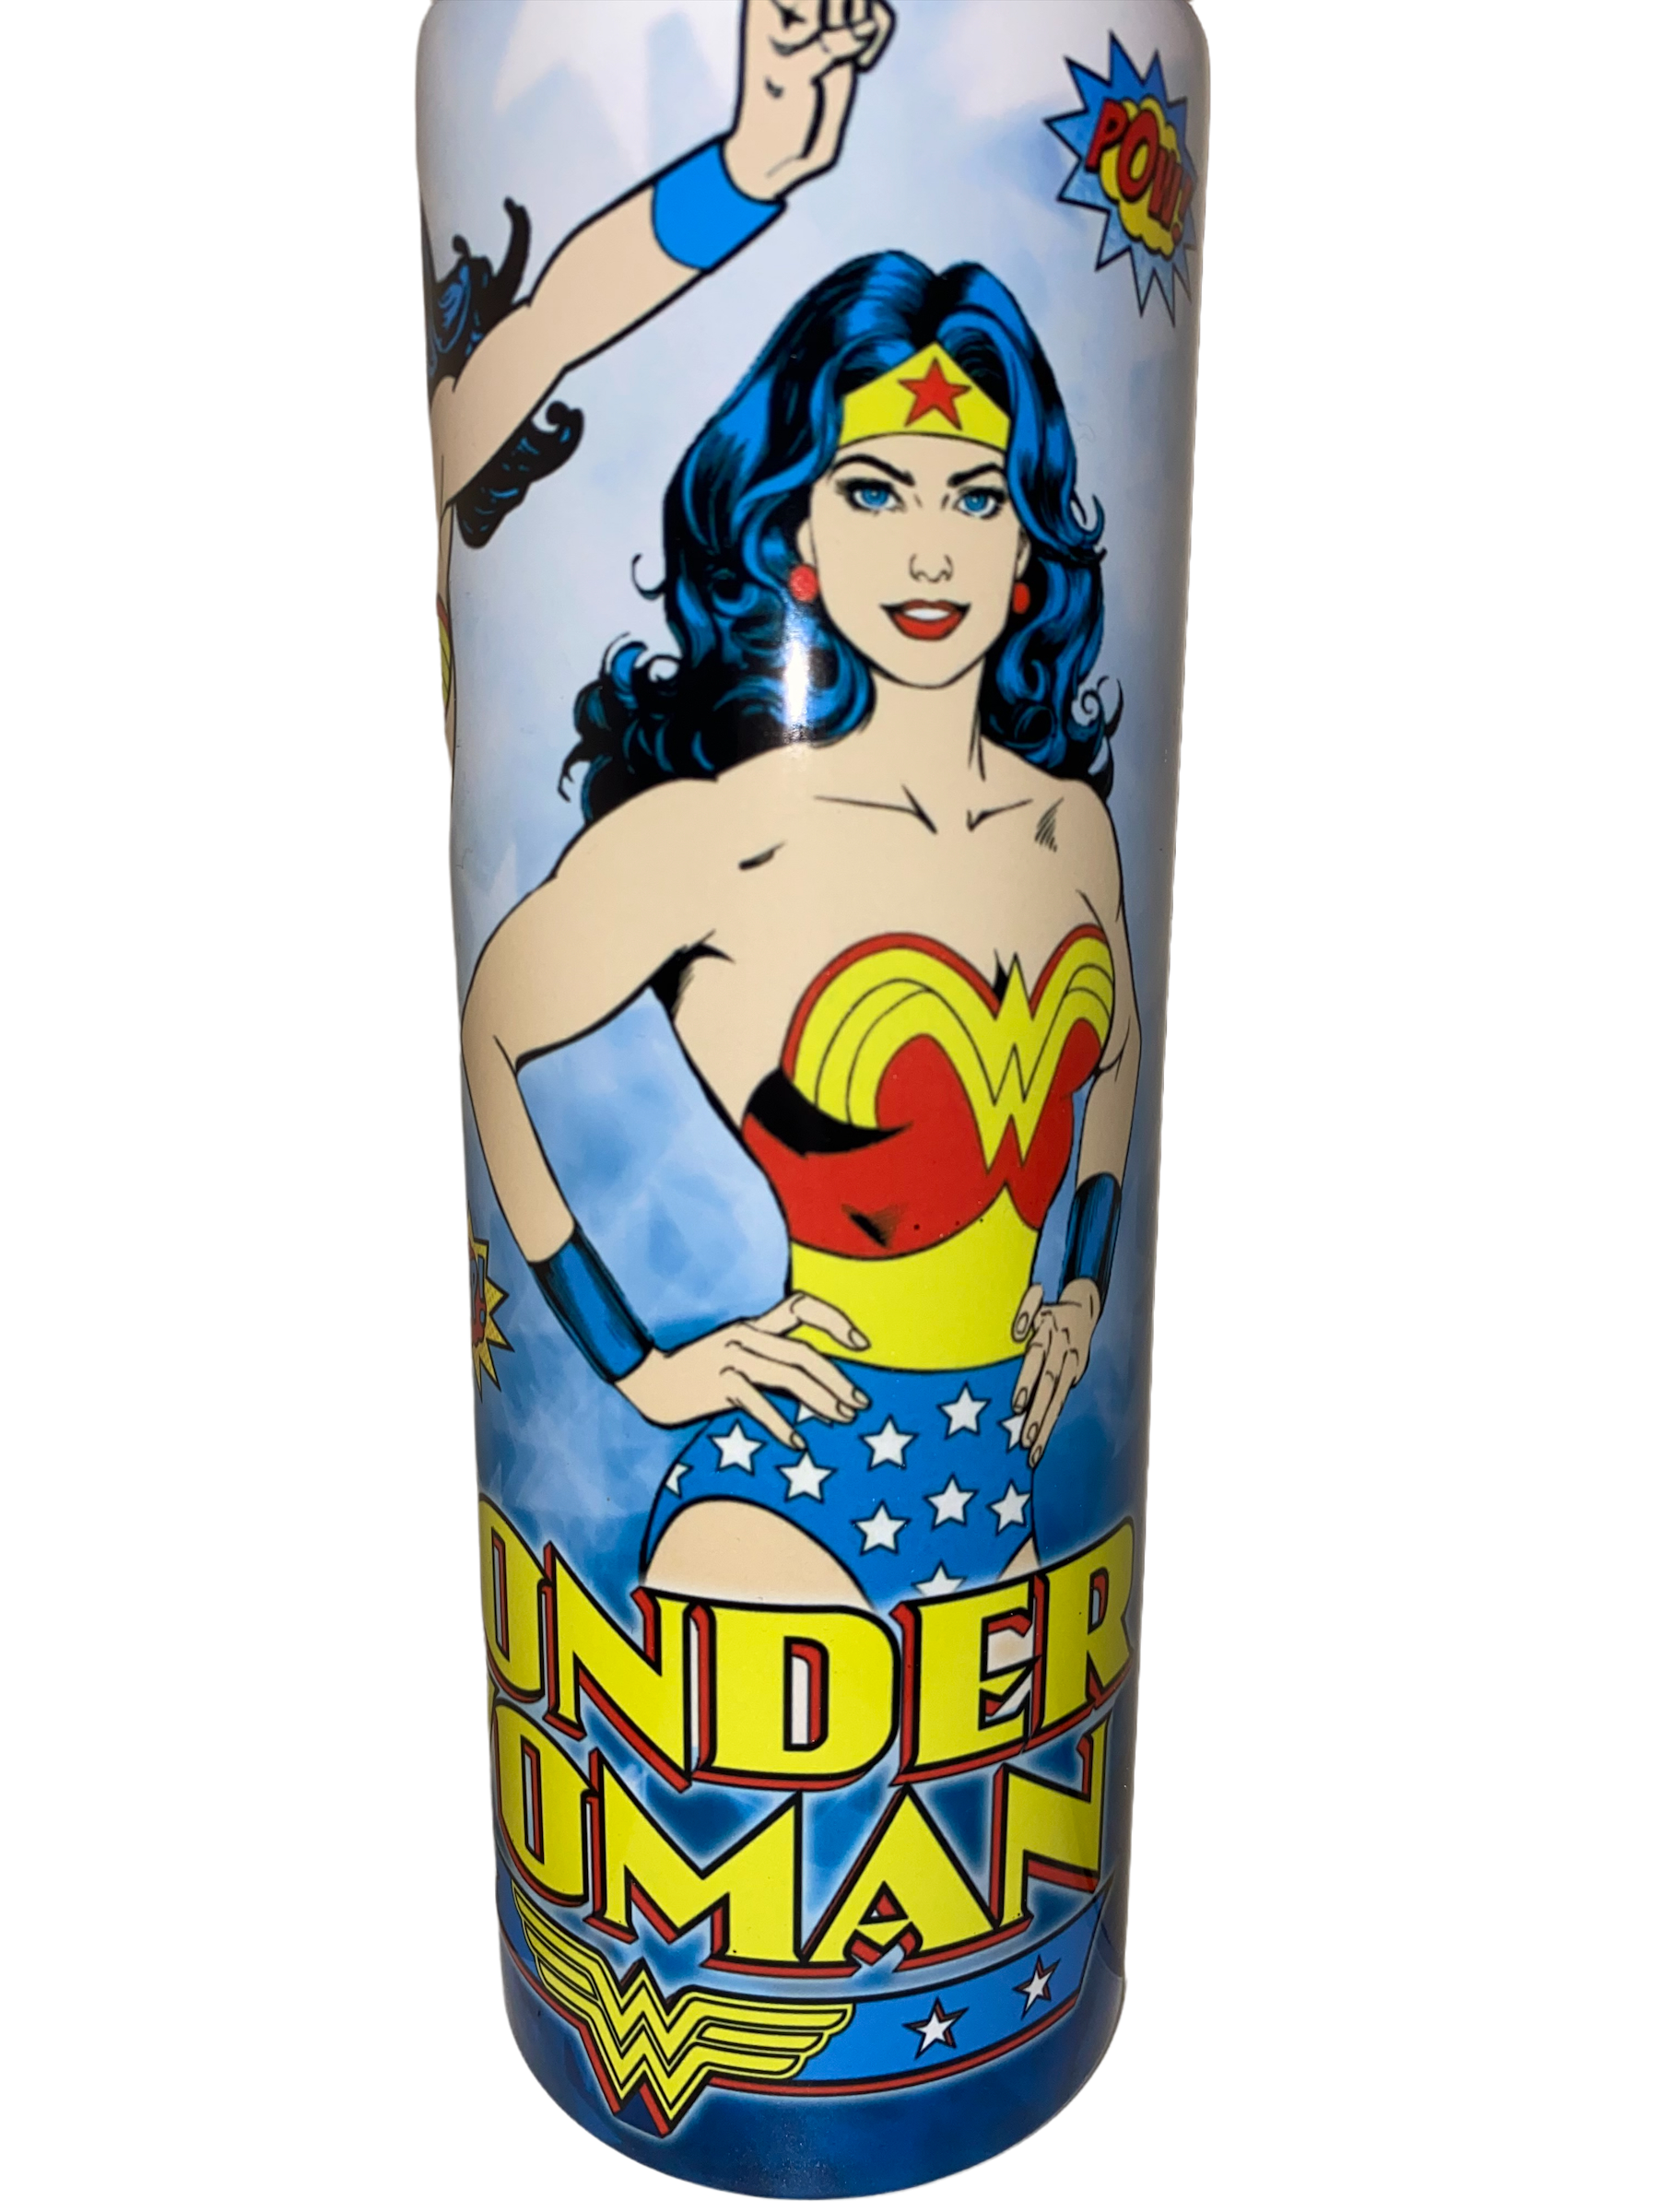 Wonder Woman, Stainless Skinny Tumbler